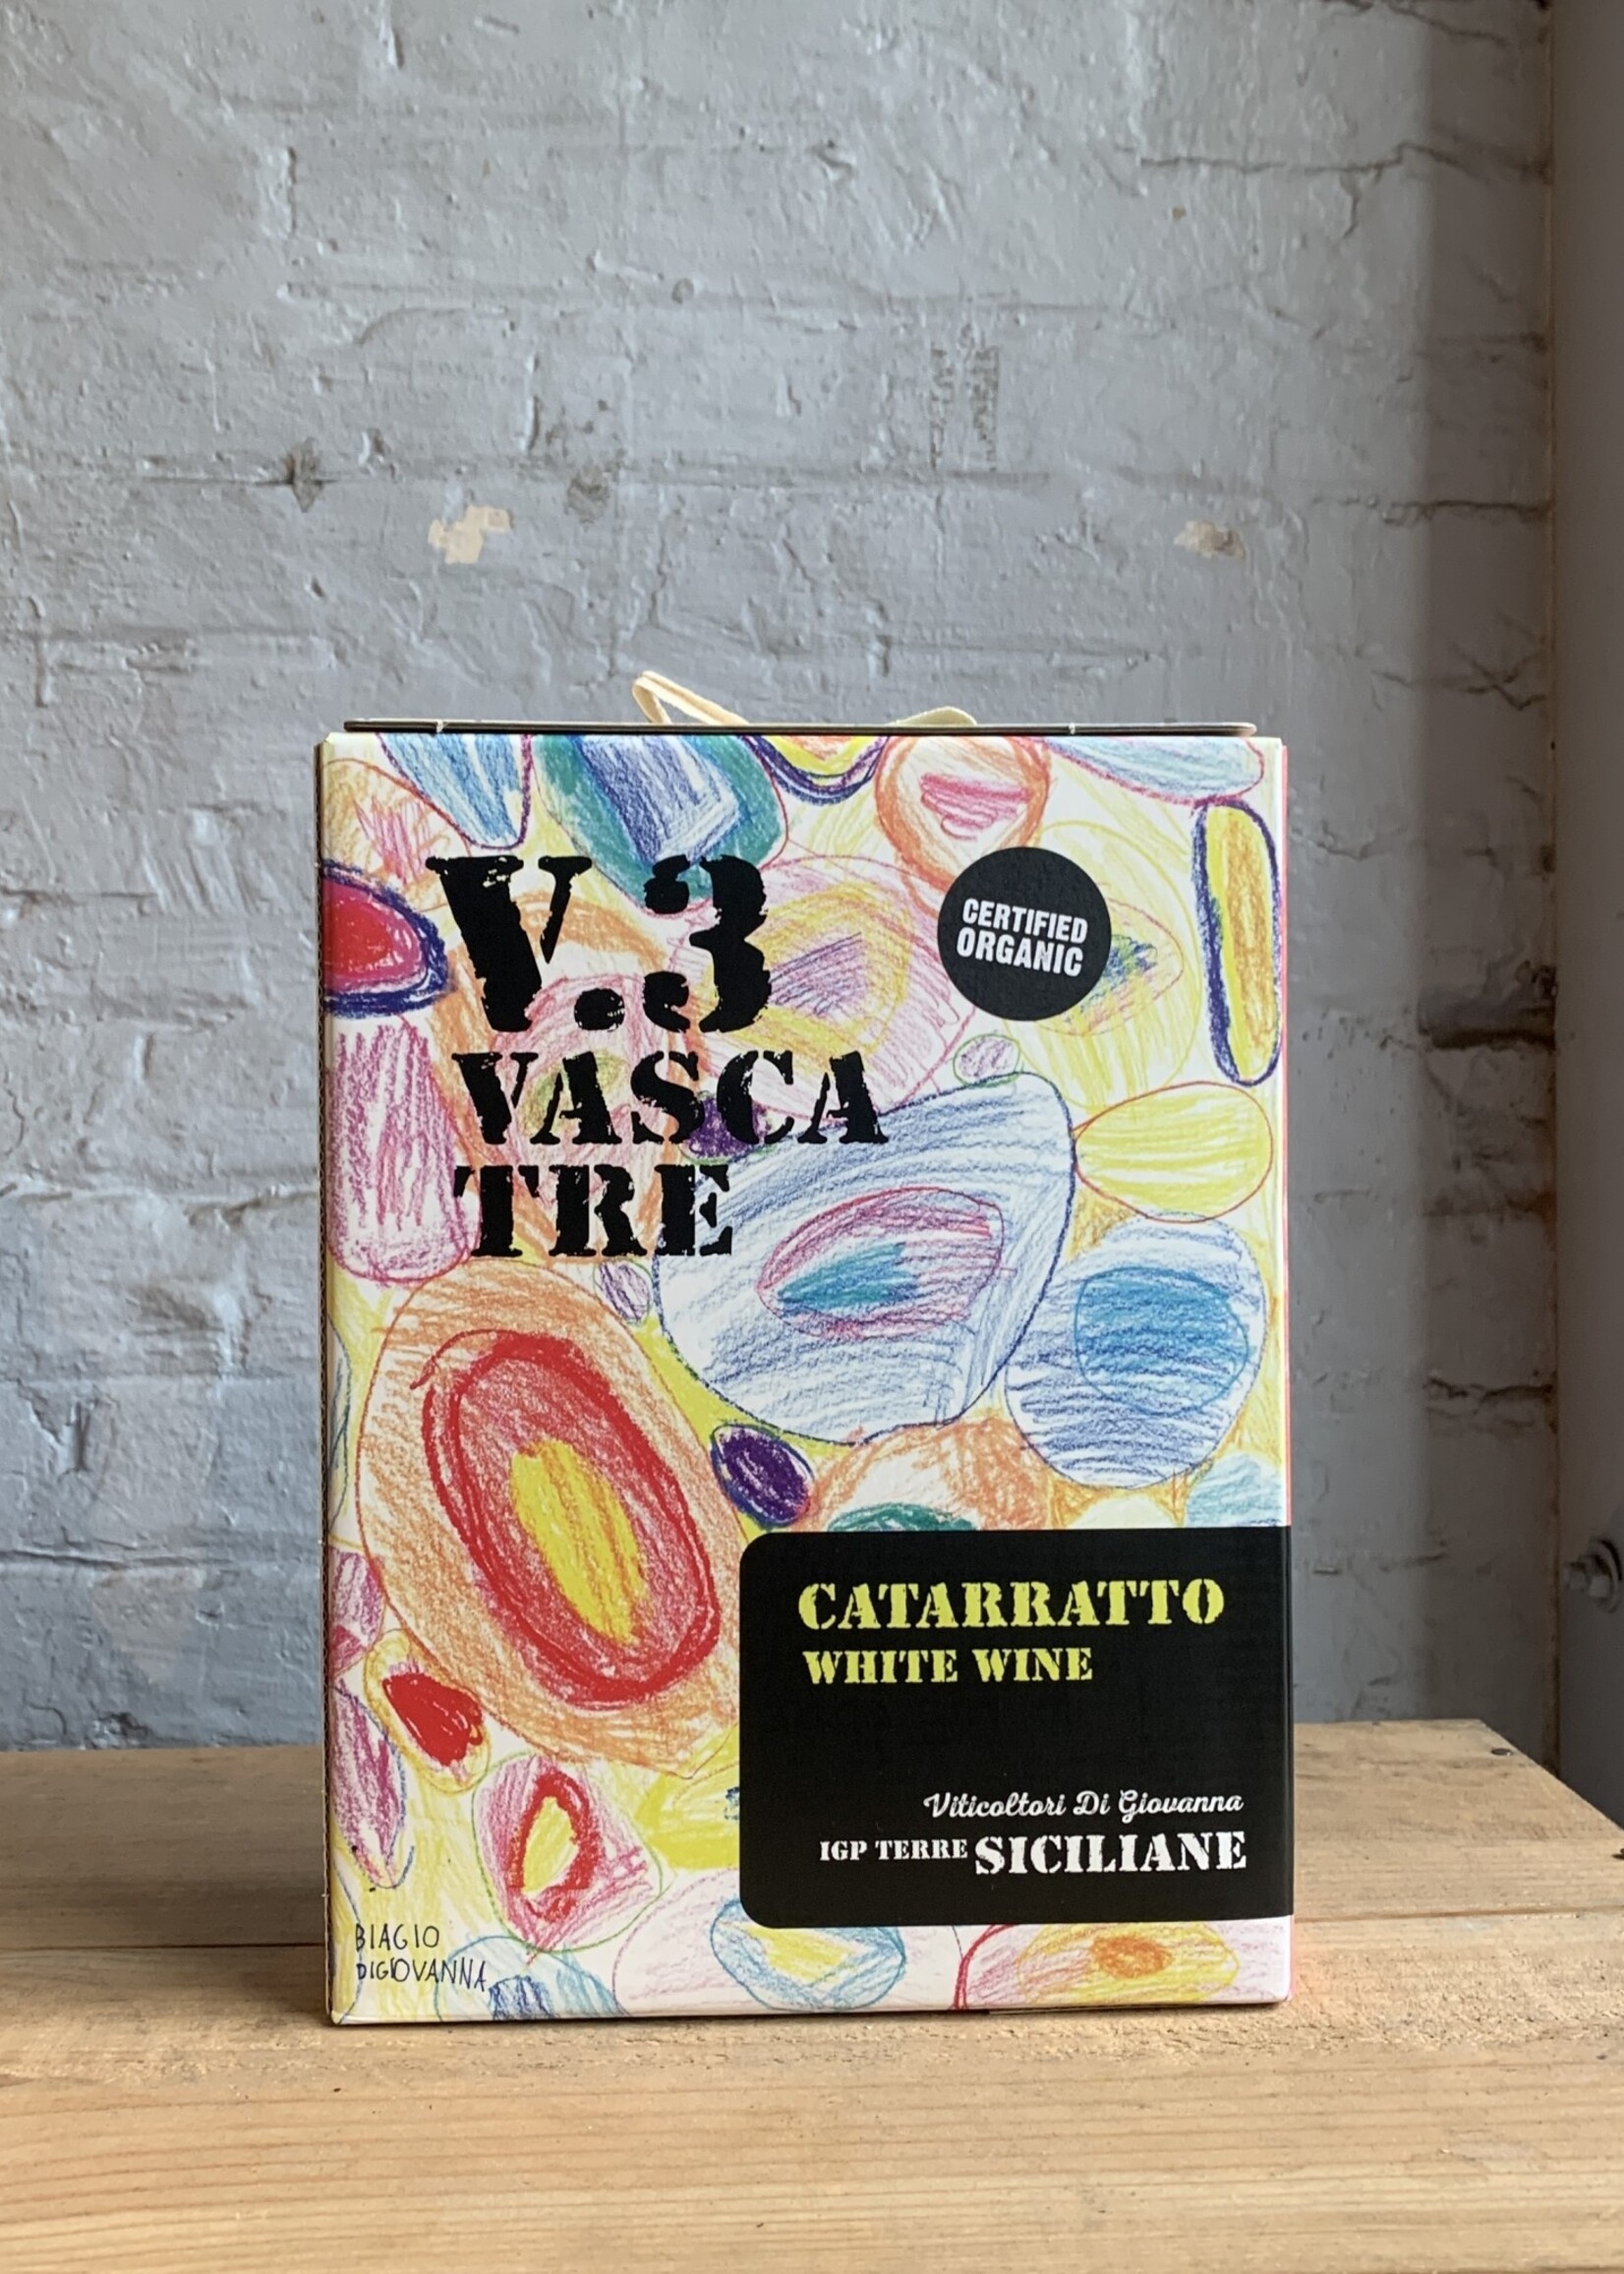 Wine 2022 Vasca V.3 Tre Catarratto - Sicily, Italy (3ltr Bag-in-Box)